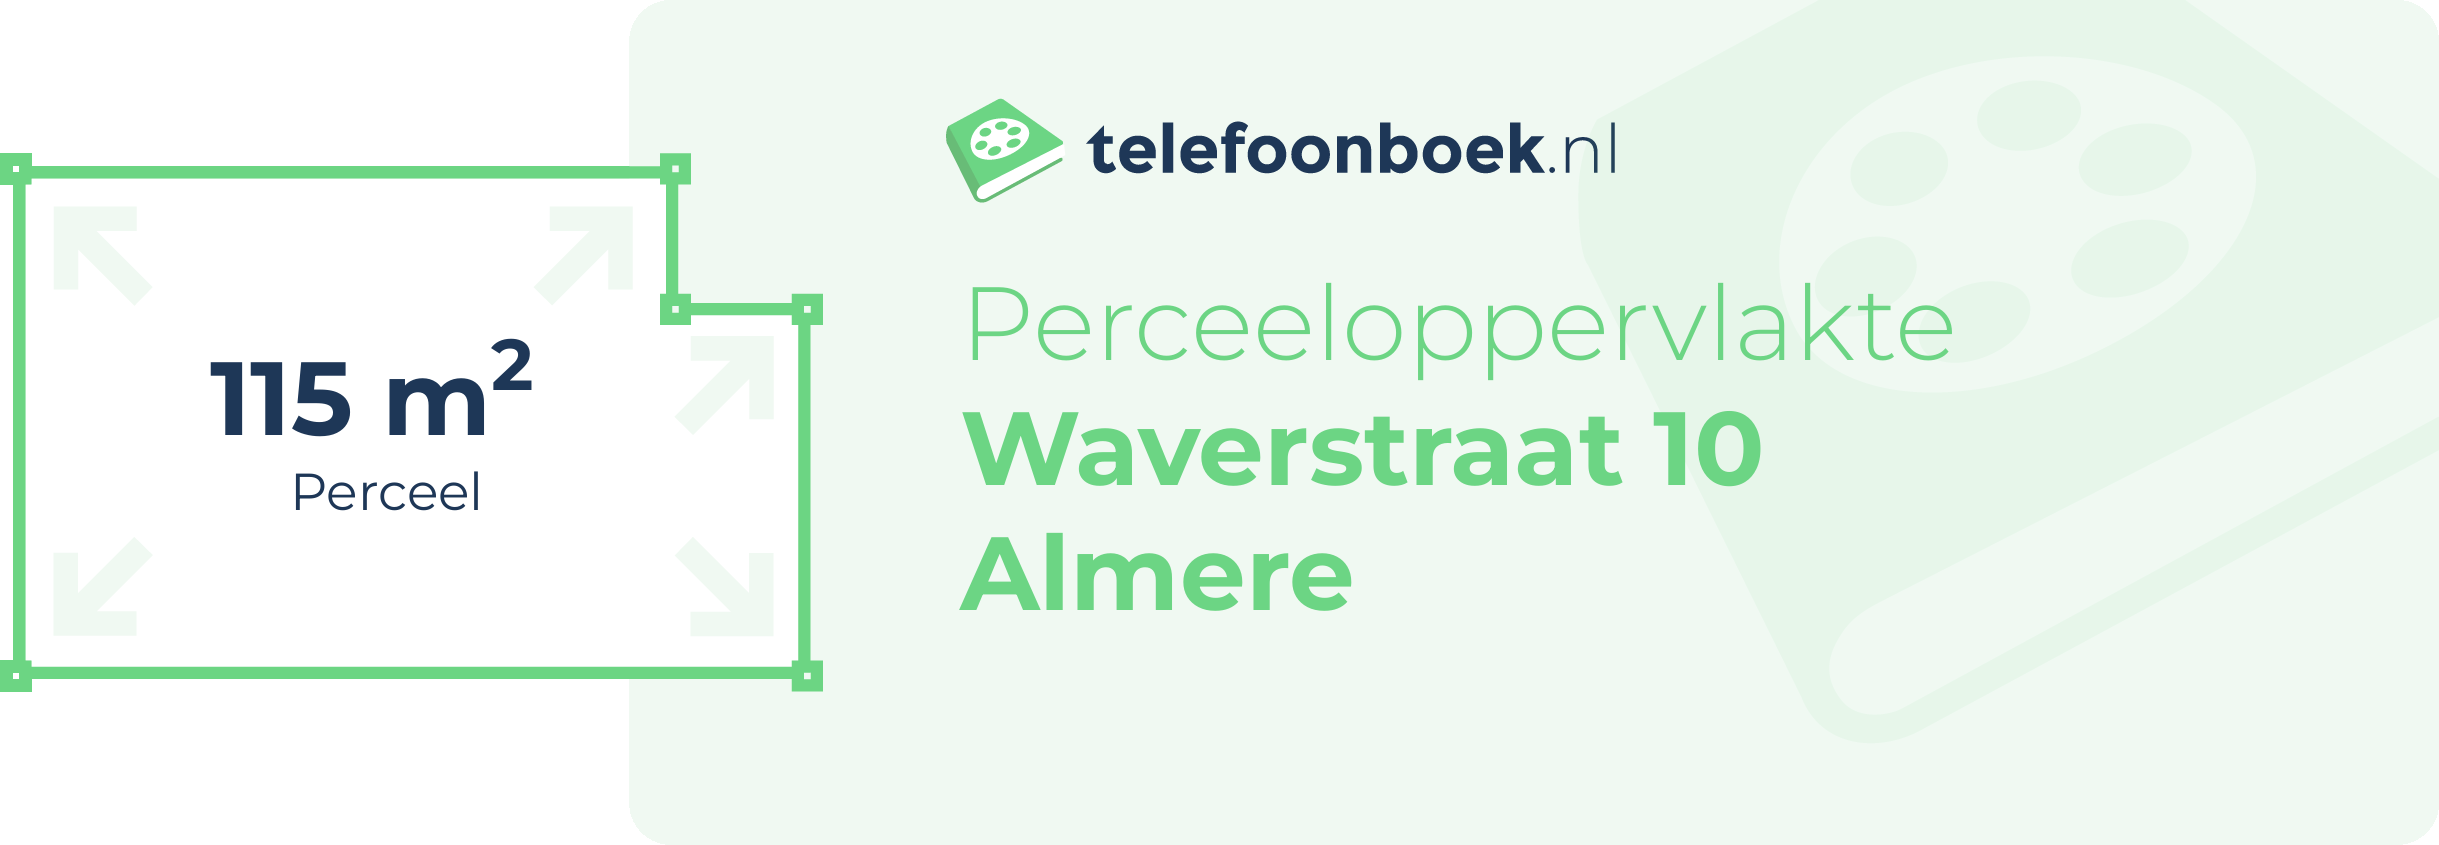 Perceeloppervlakte Waverstraat 10 Almere